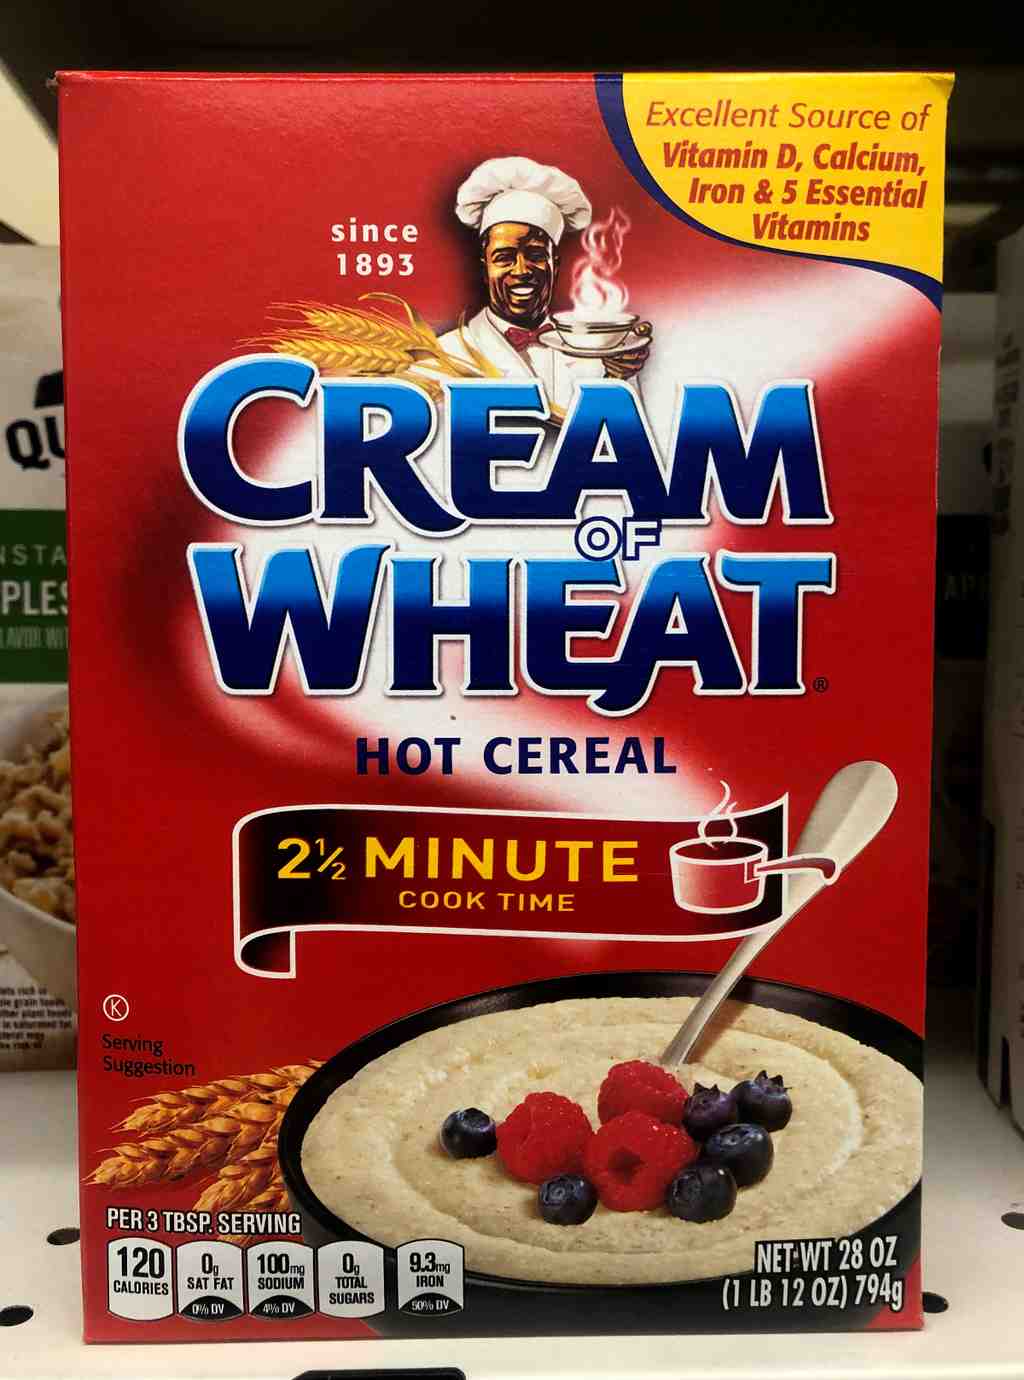 Cream of Wheat elimina el chef negro del empaque - 7 - septiembre 6, 2022